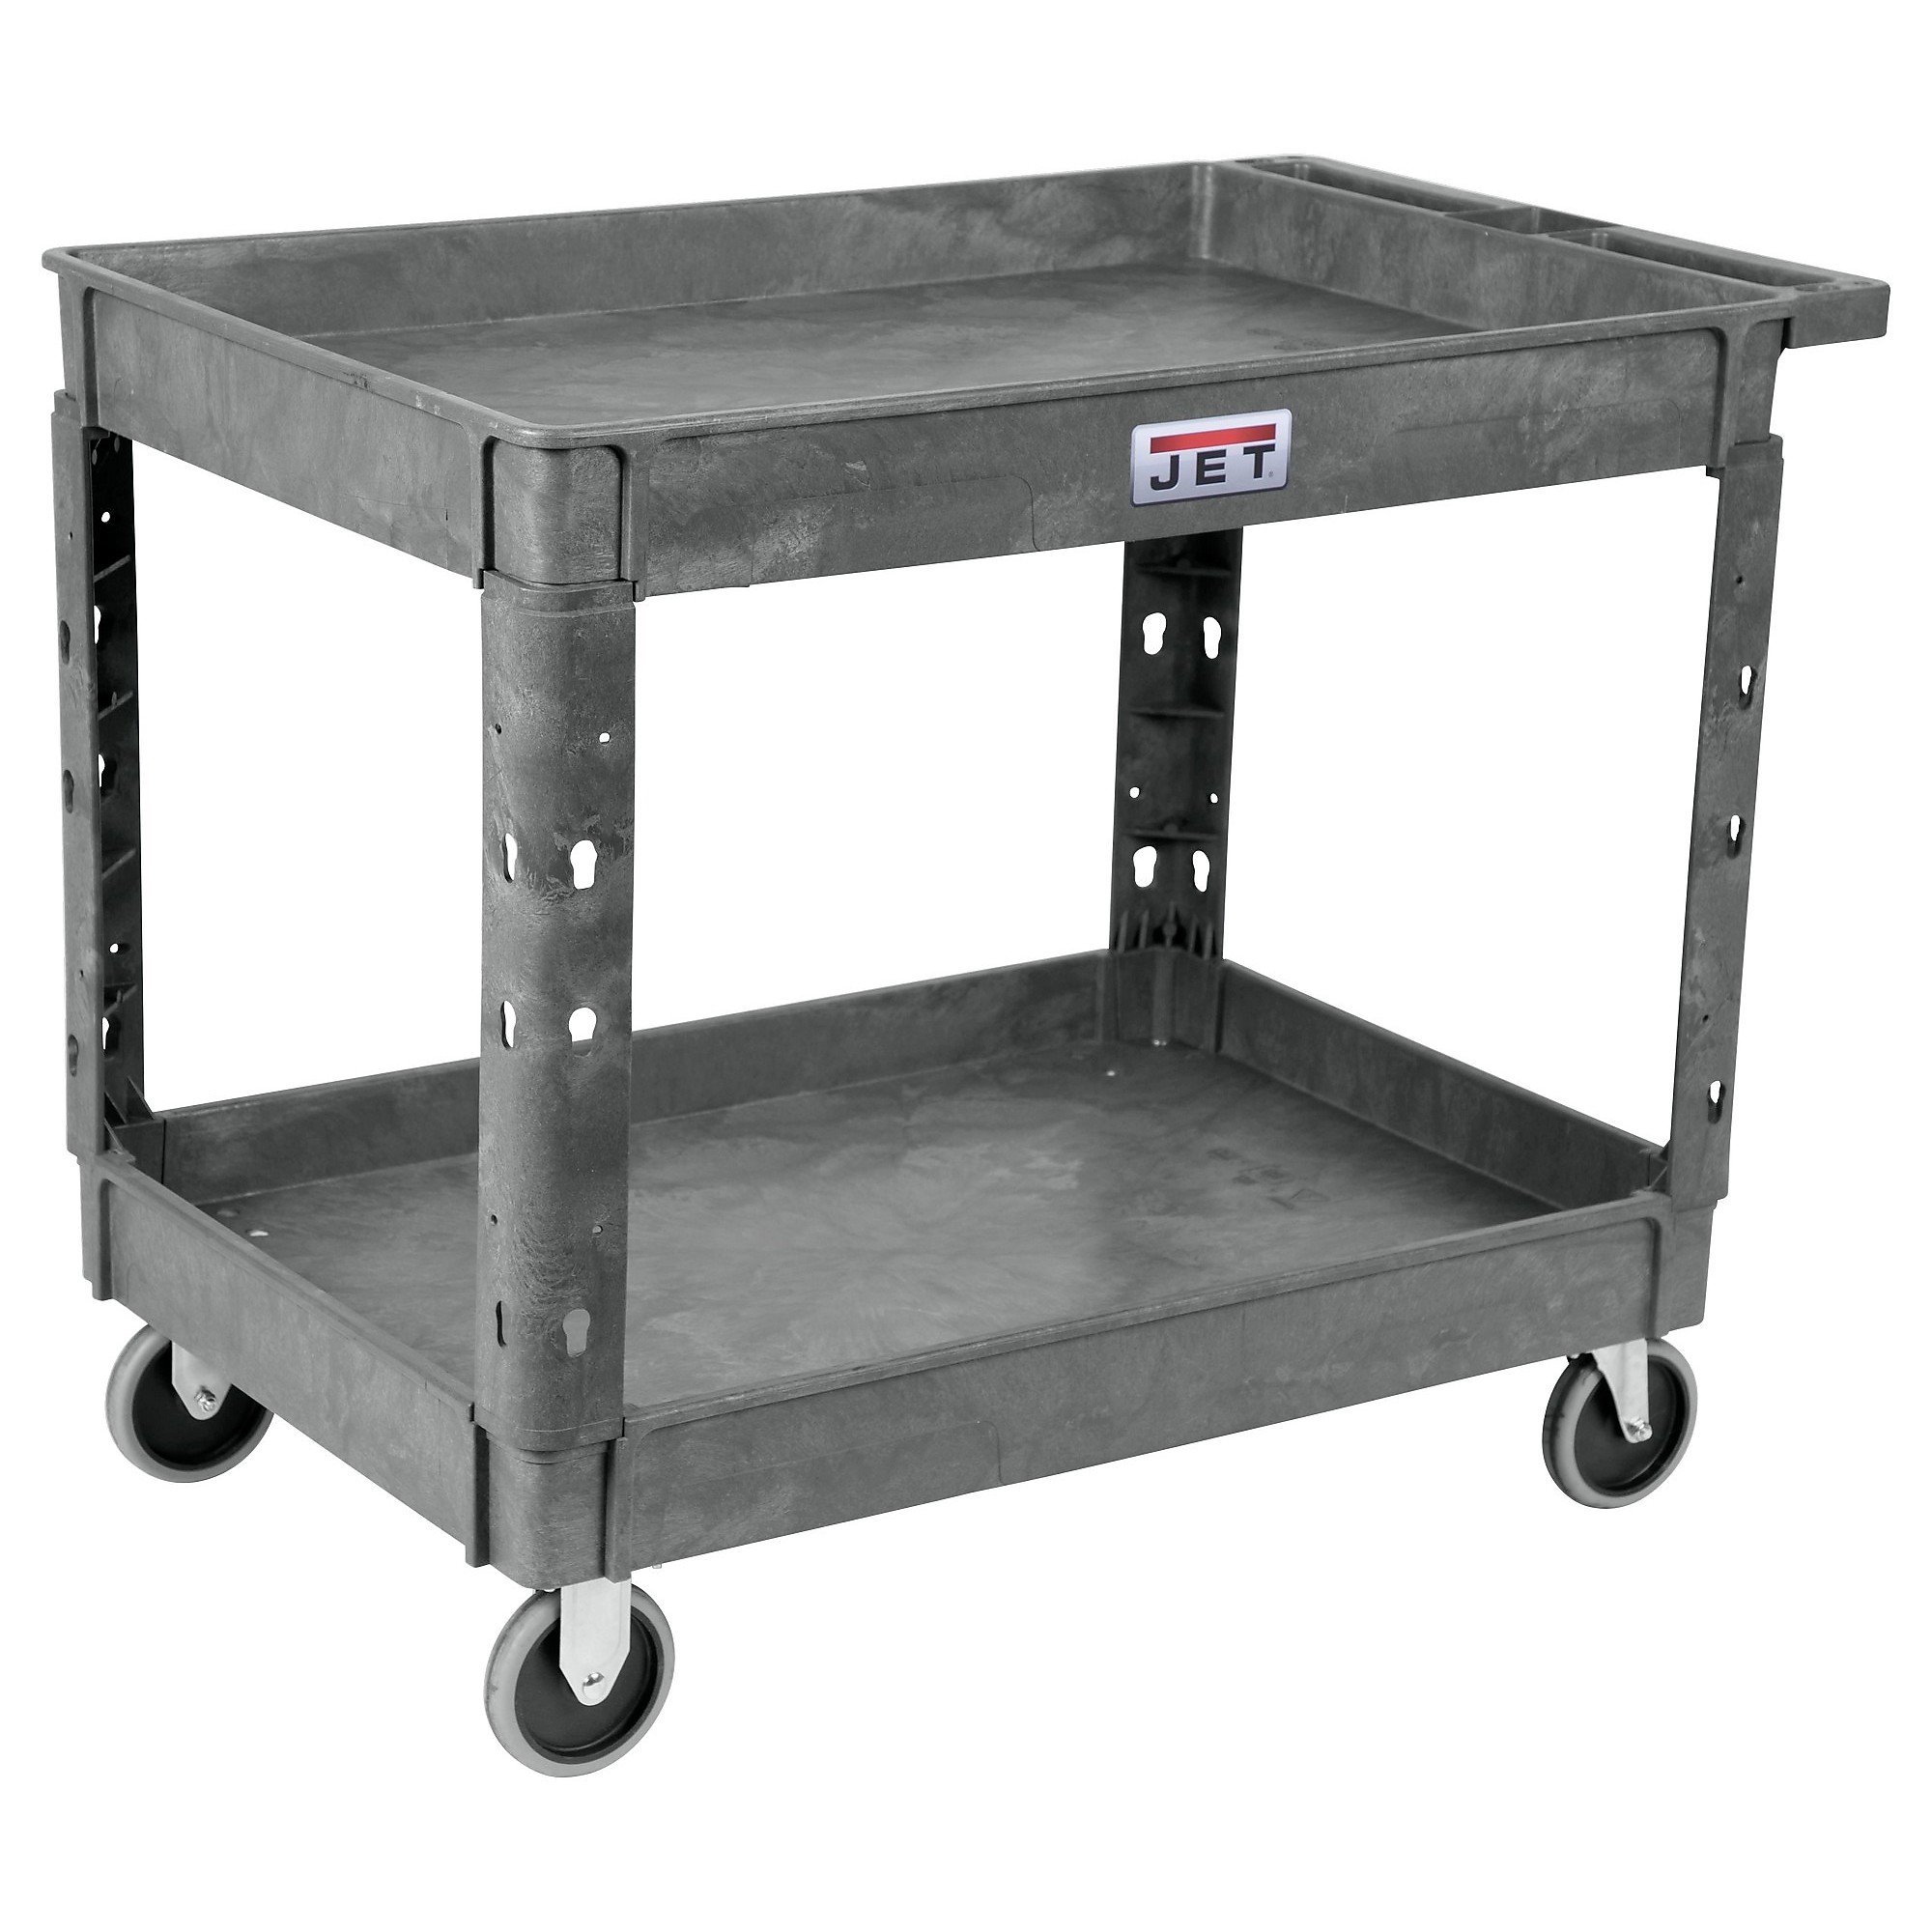 JET, Resin Utility Cart, Total Capacity 1500 lb, Shelves (qty.) 2 Material Resin, Model 141014